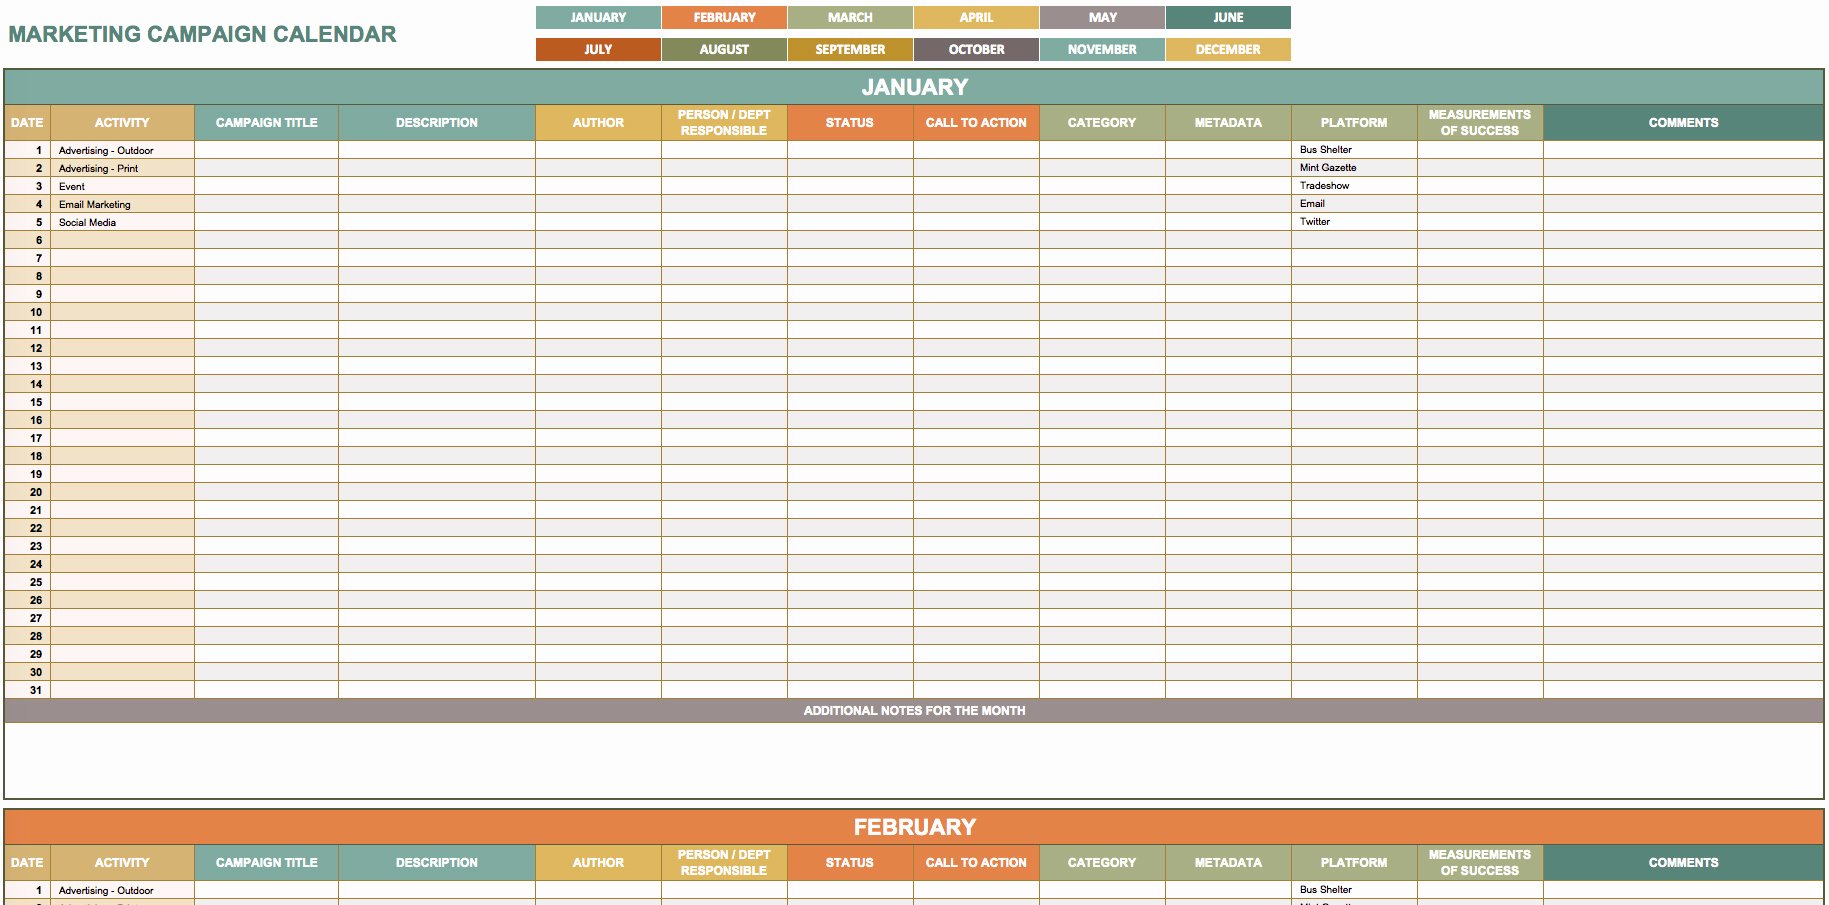 Marketing Calendar Template Excel Best Of 9 Free Marketing Calendar Templates for Excel Smartsheet